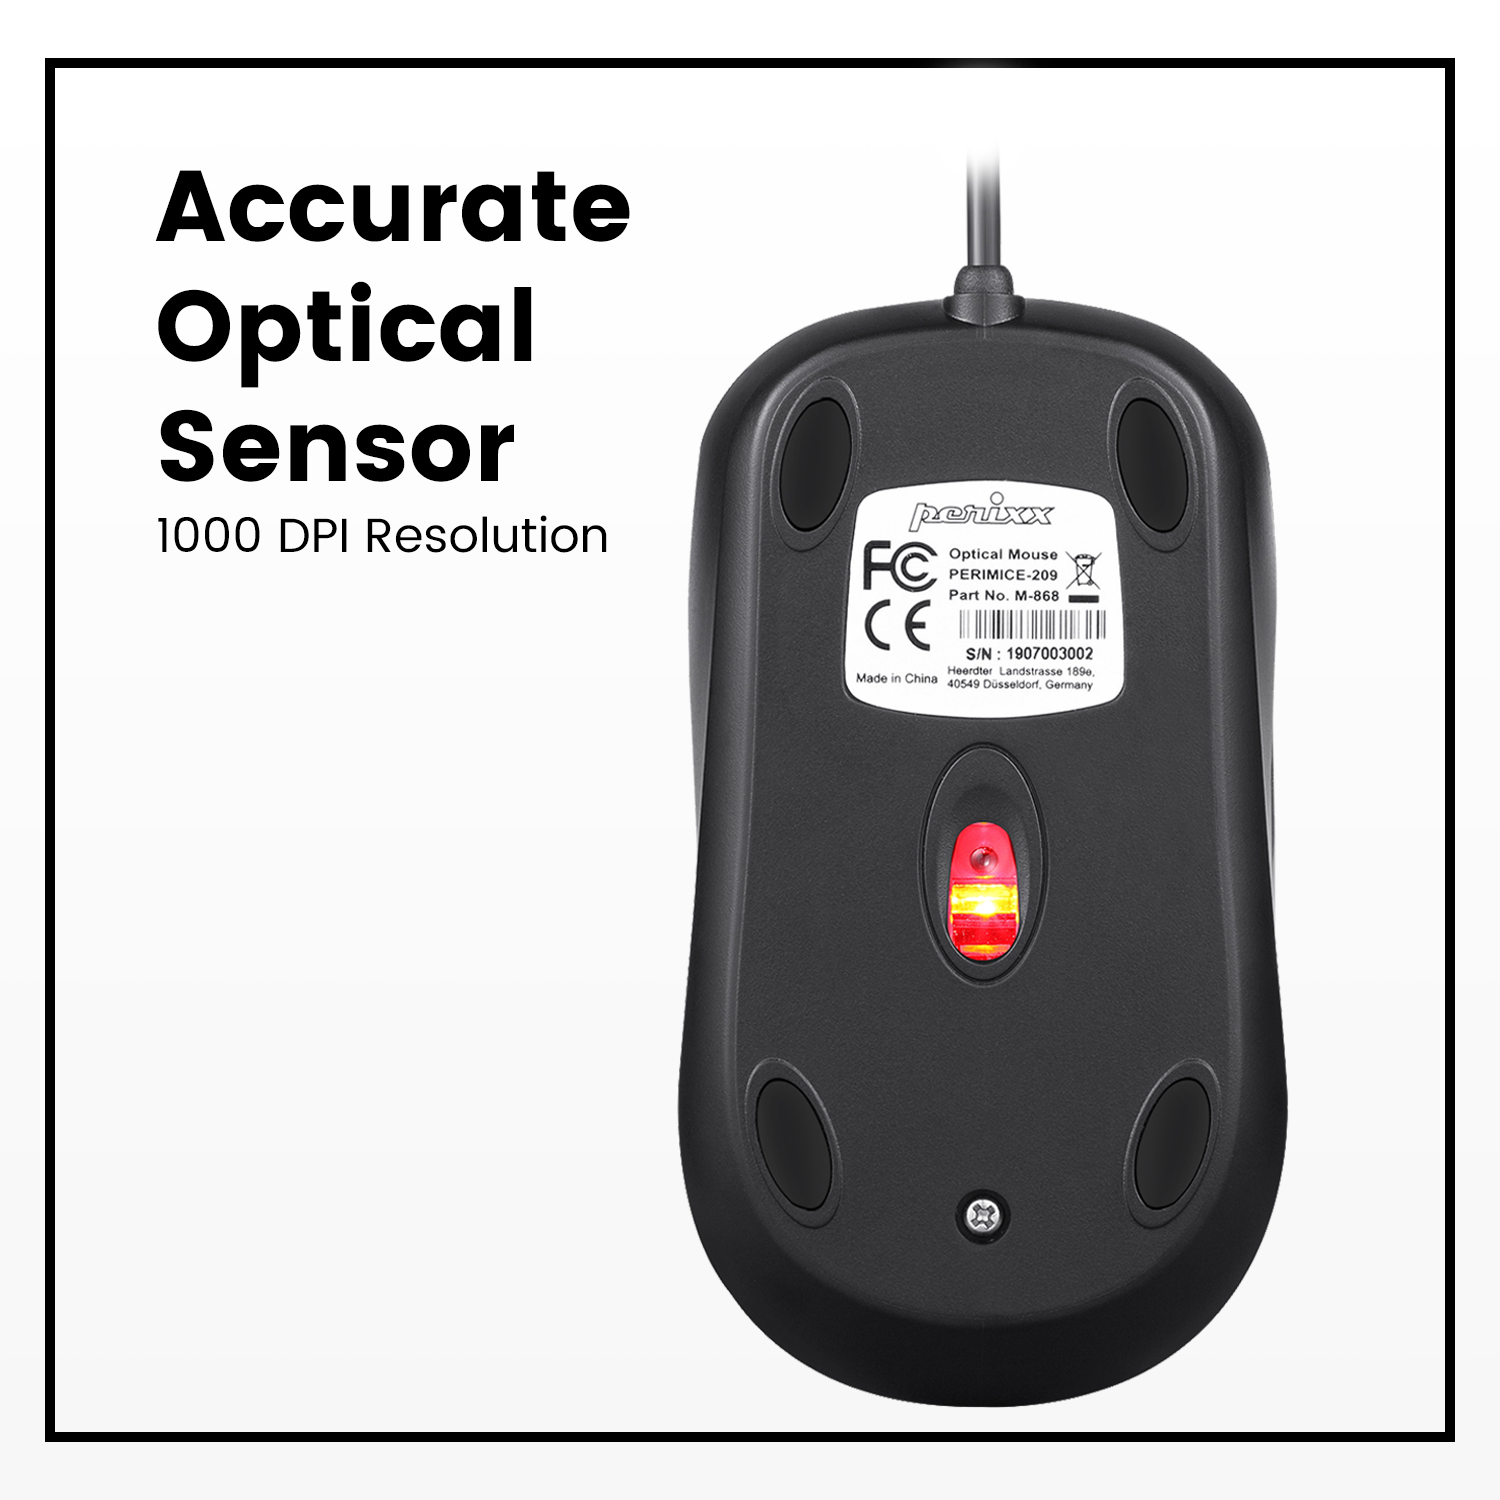  Accurate Optical Sensor